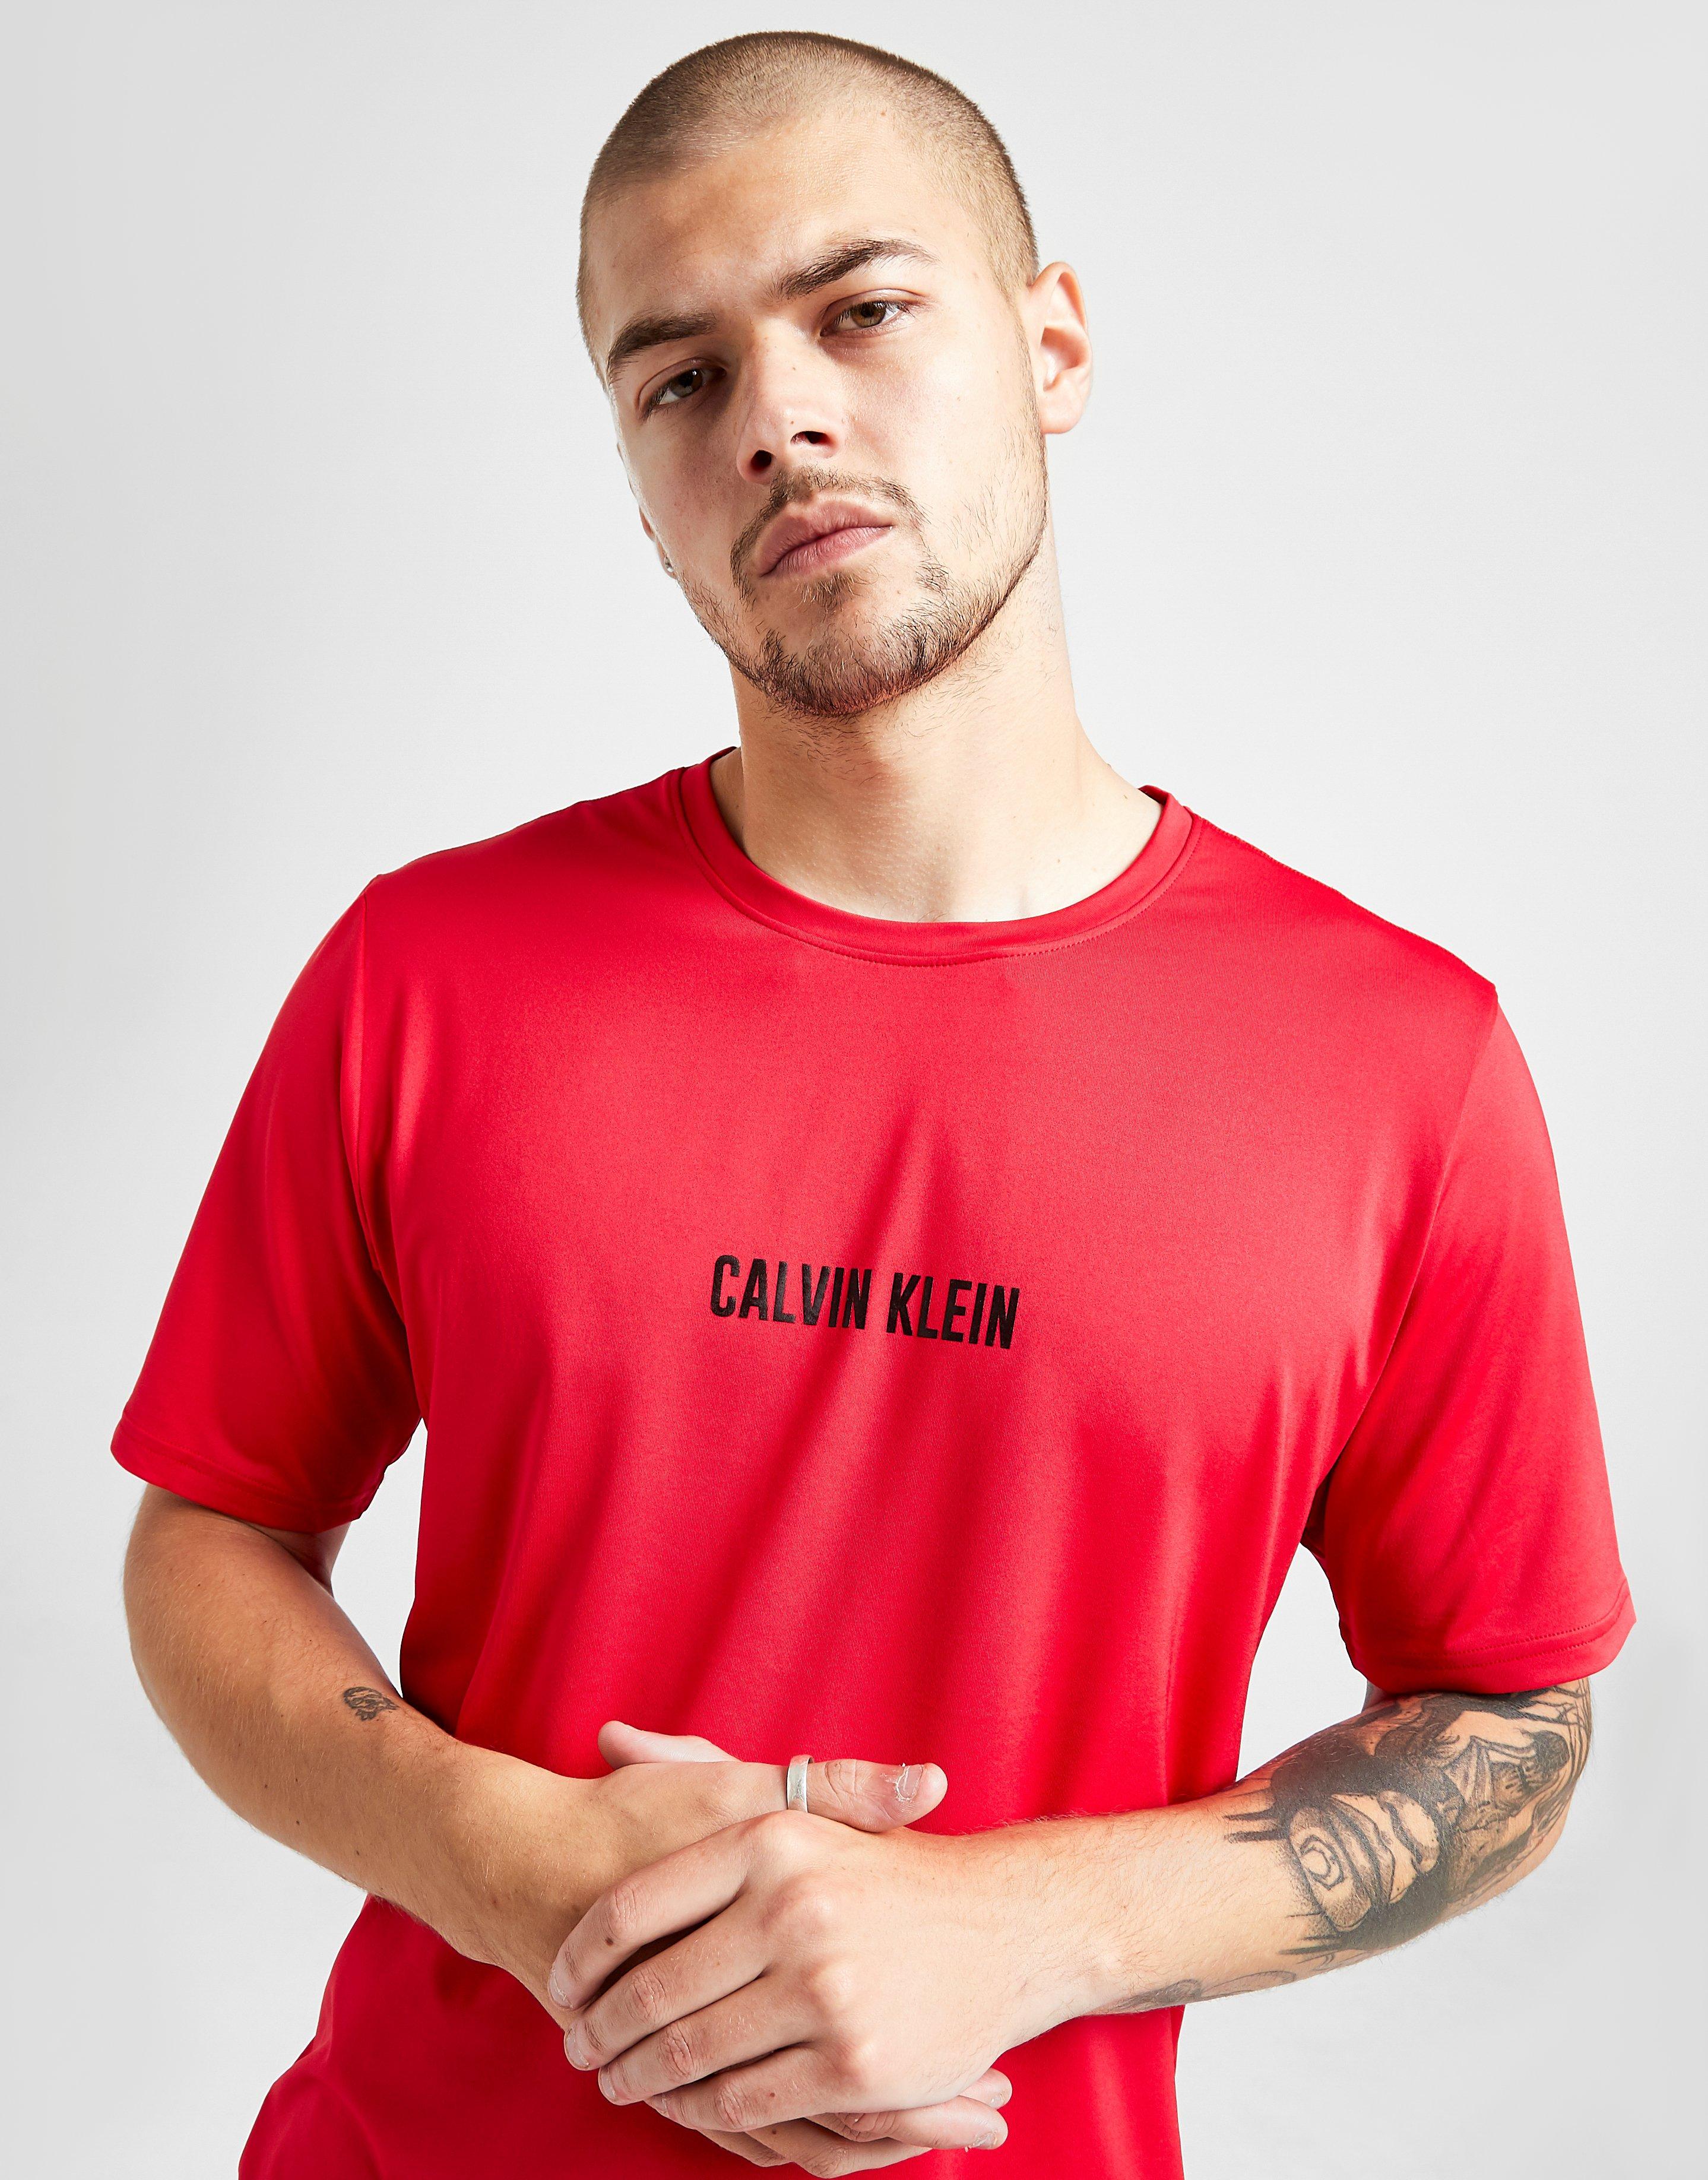 calvin klein red t shirt